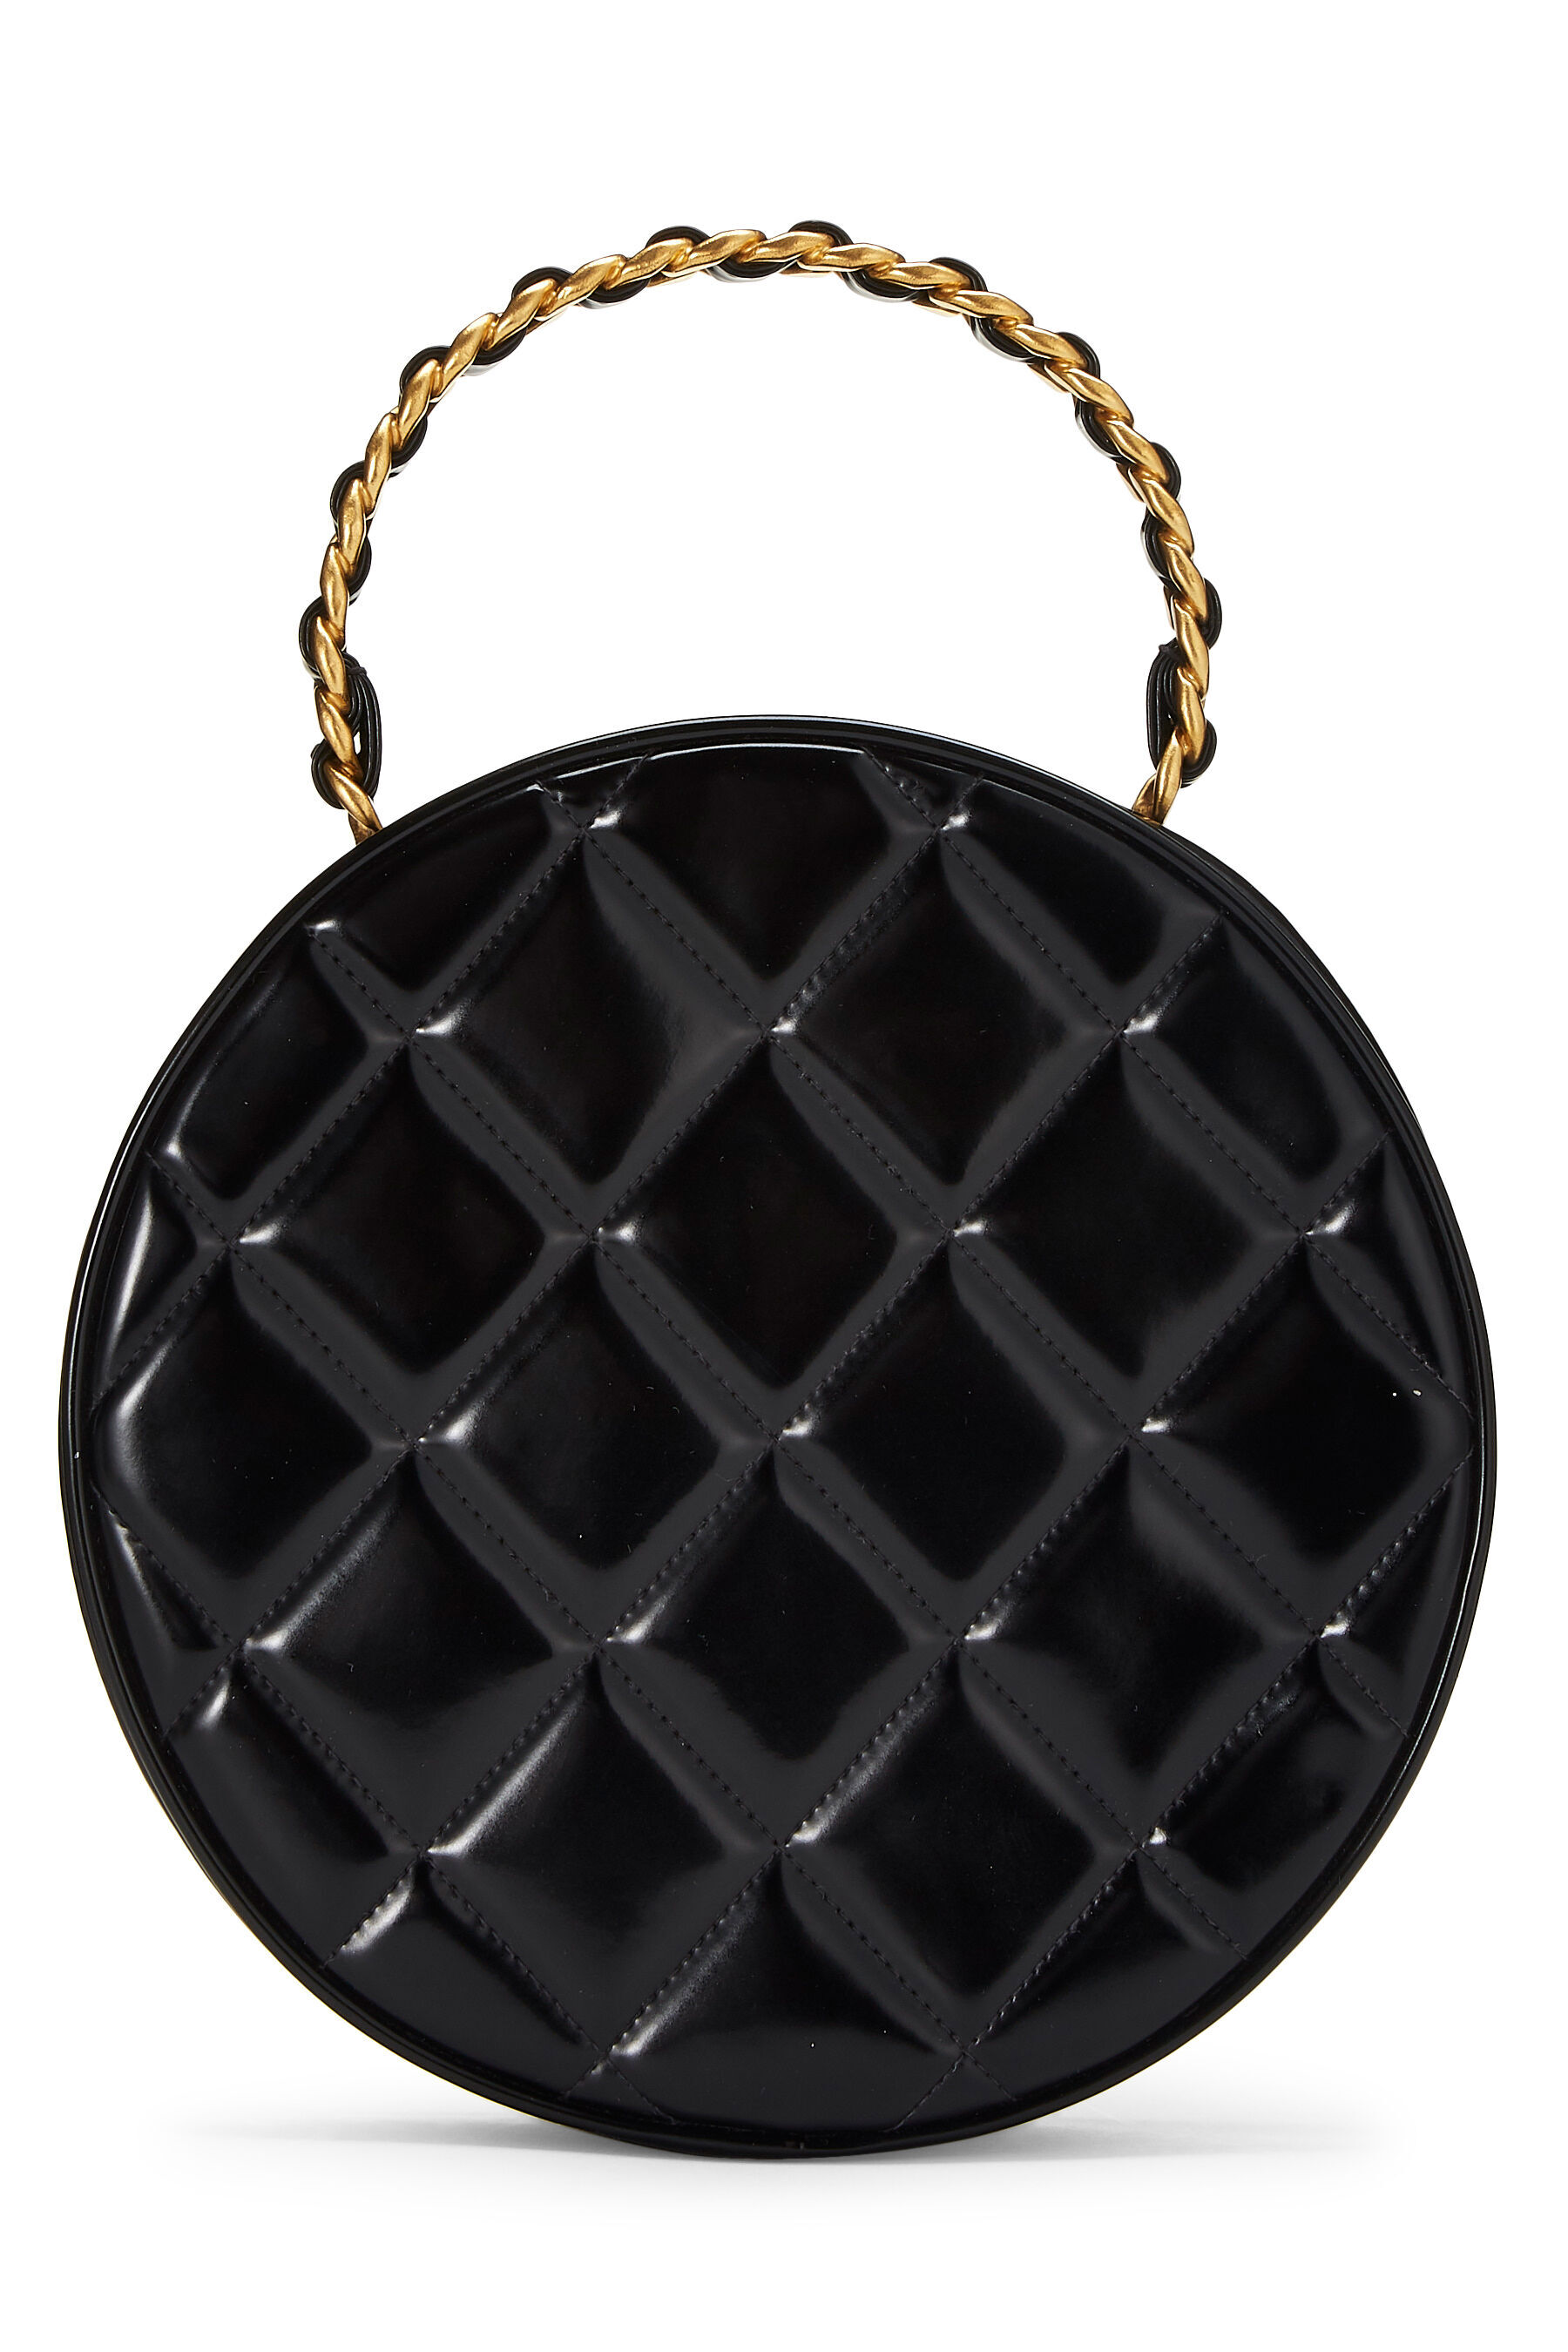 CHANEL Black Caviar Leather Mini Round Purse Vanity